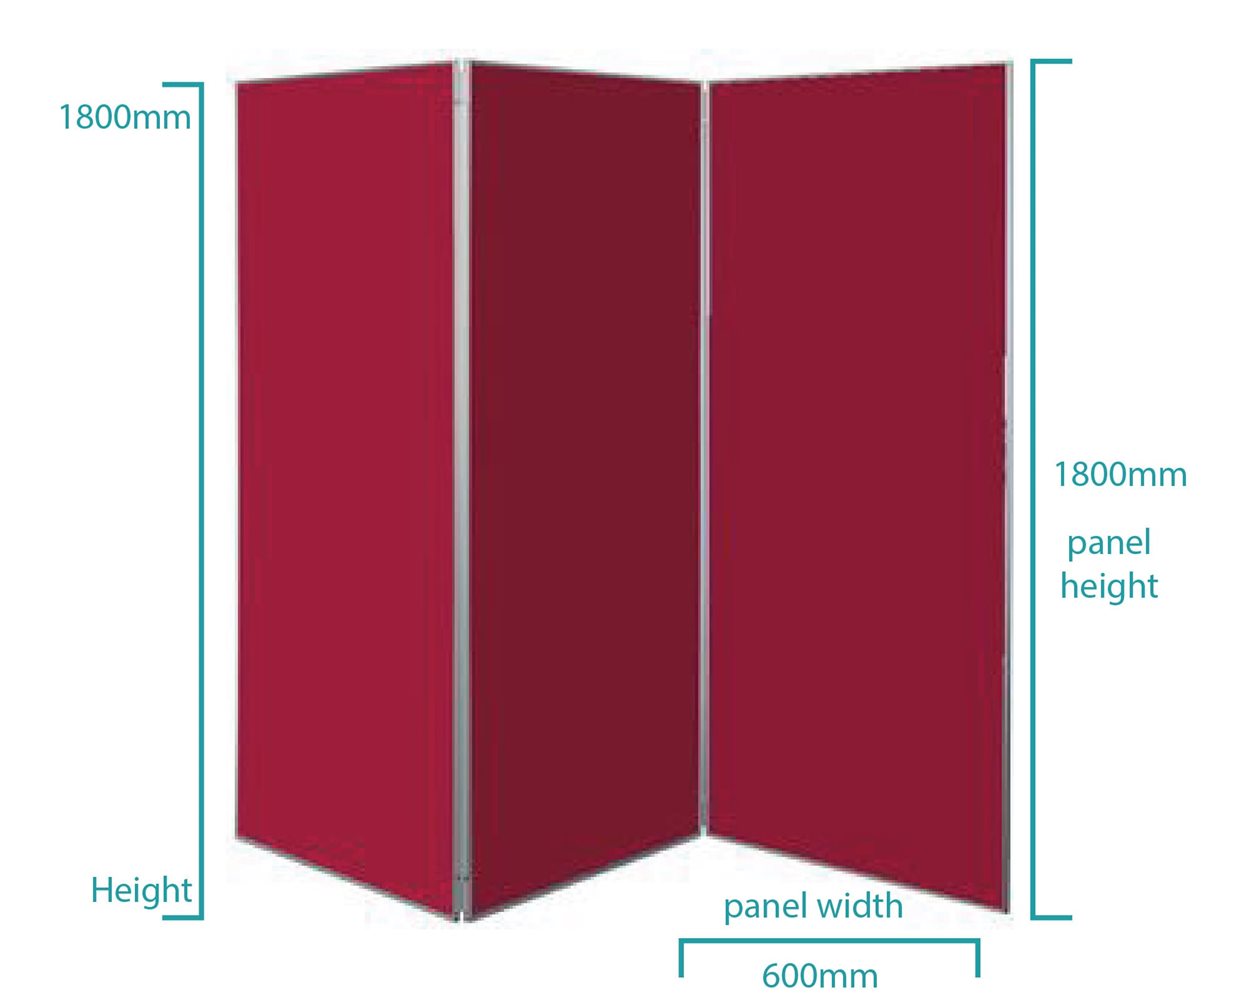 large 3 panel folding display board dimensions